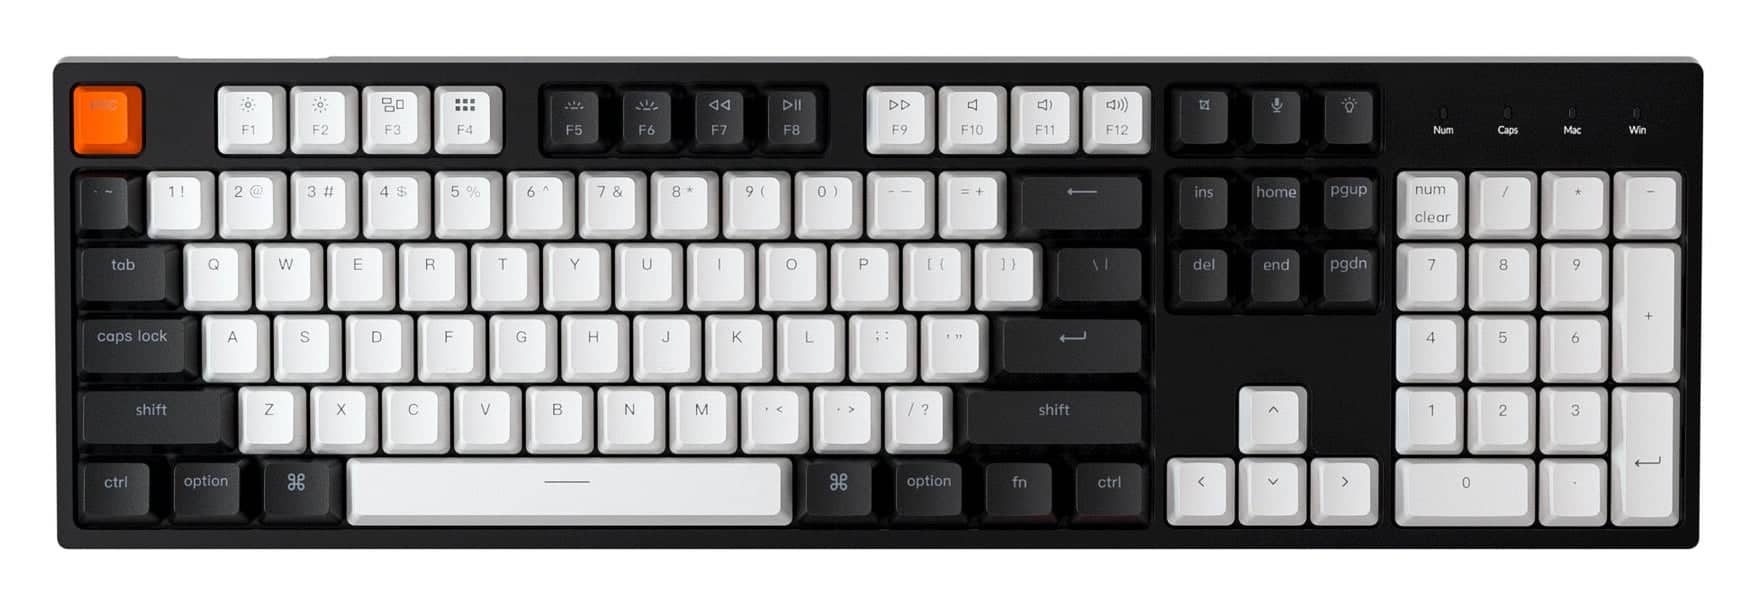 Best mechanical keyboards: Keychron C2 Wired